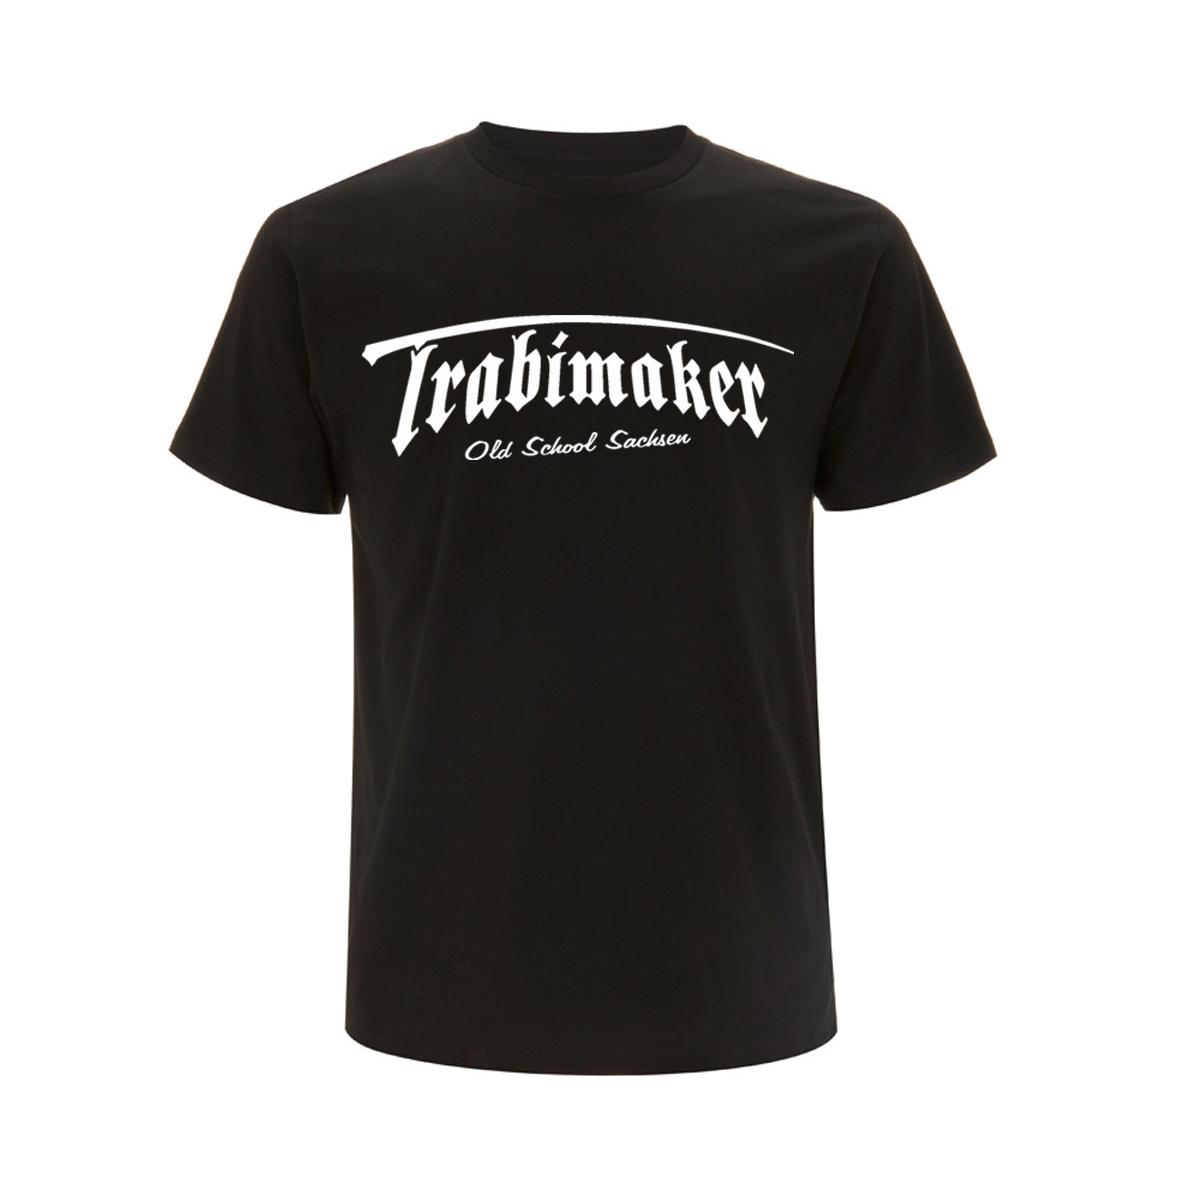 Trabimaker - Old School Sachsen - Männer T-Shirt - schwarz